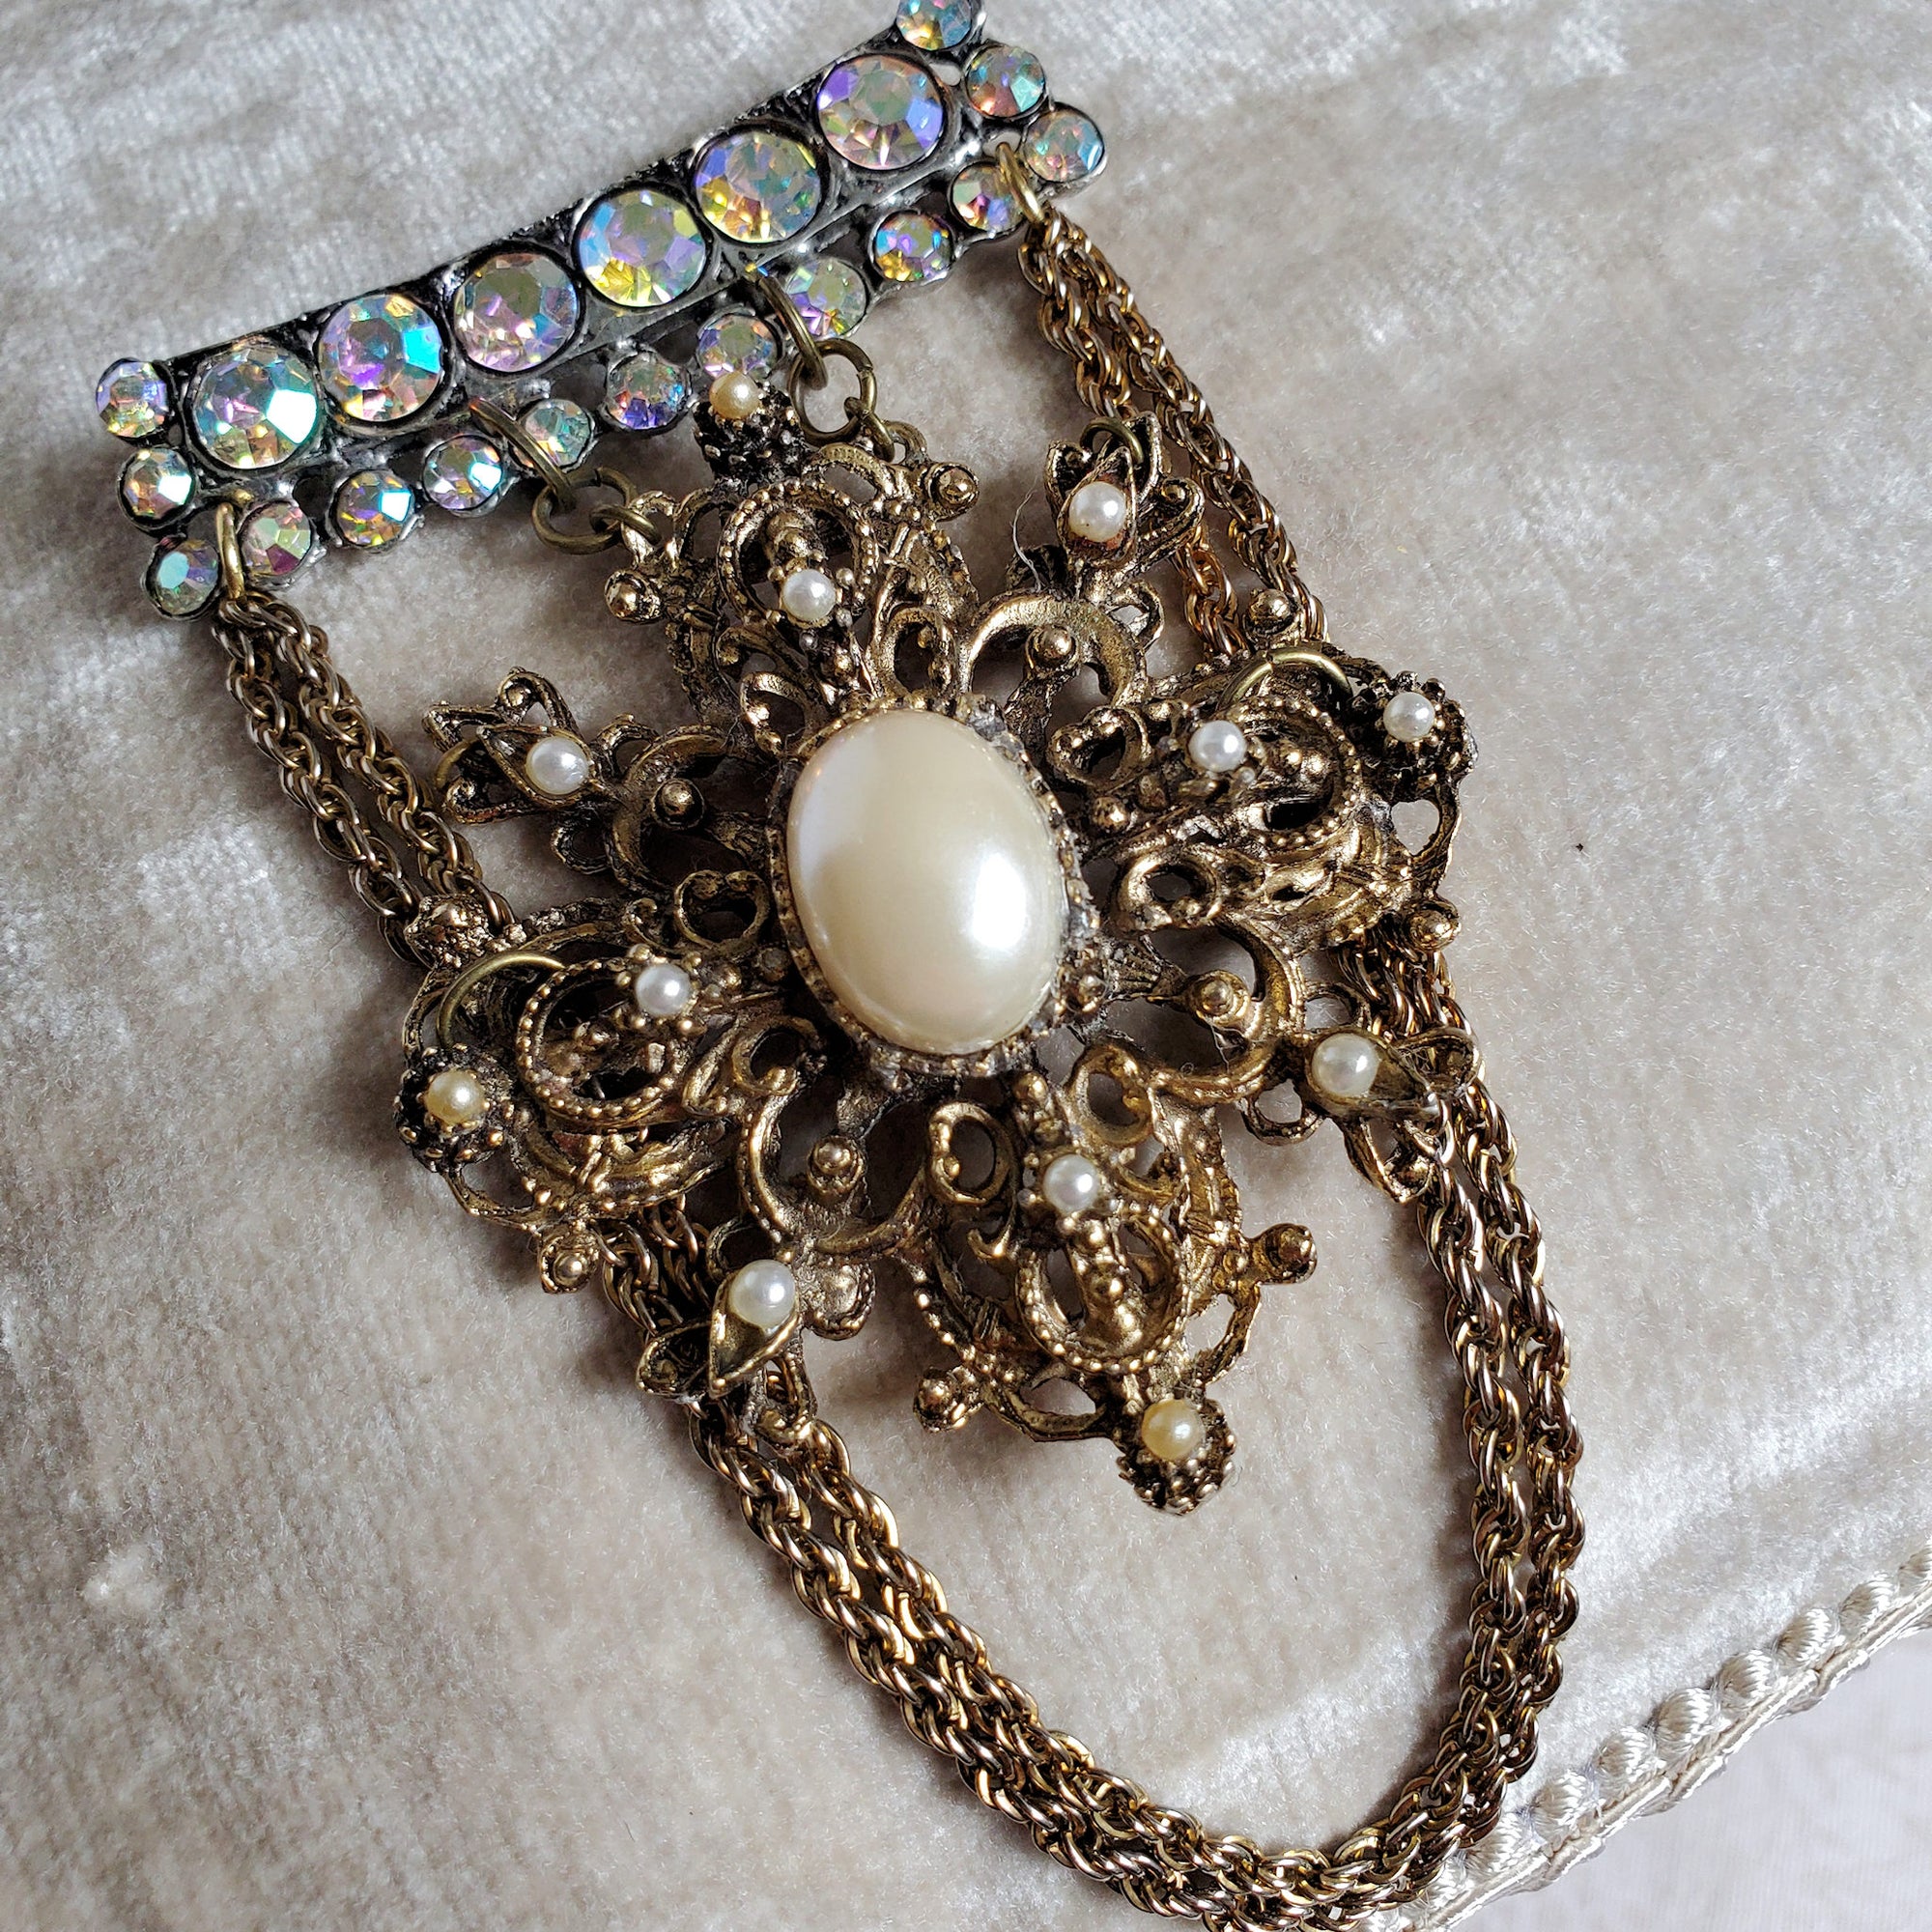 Handmade vintage Victorian style brooch